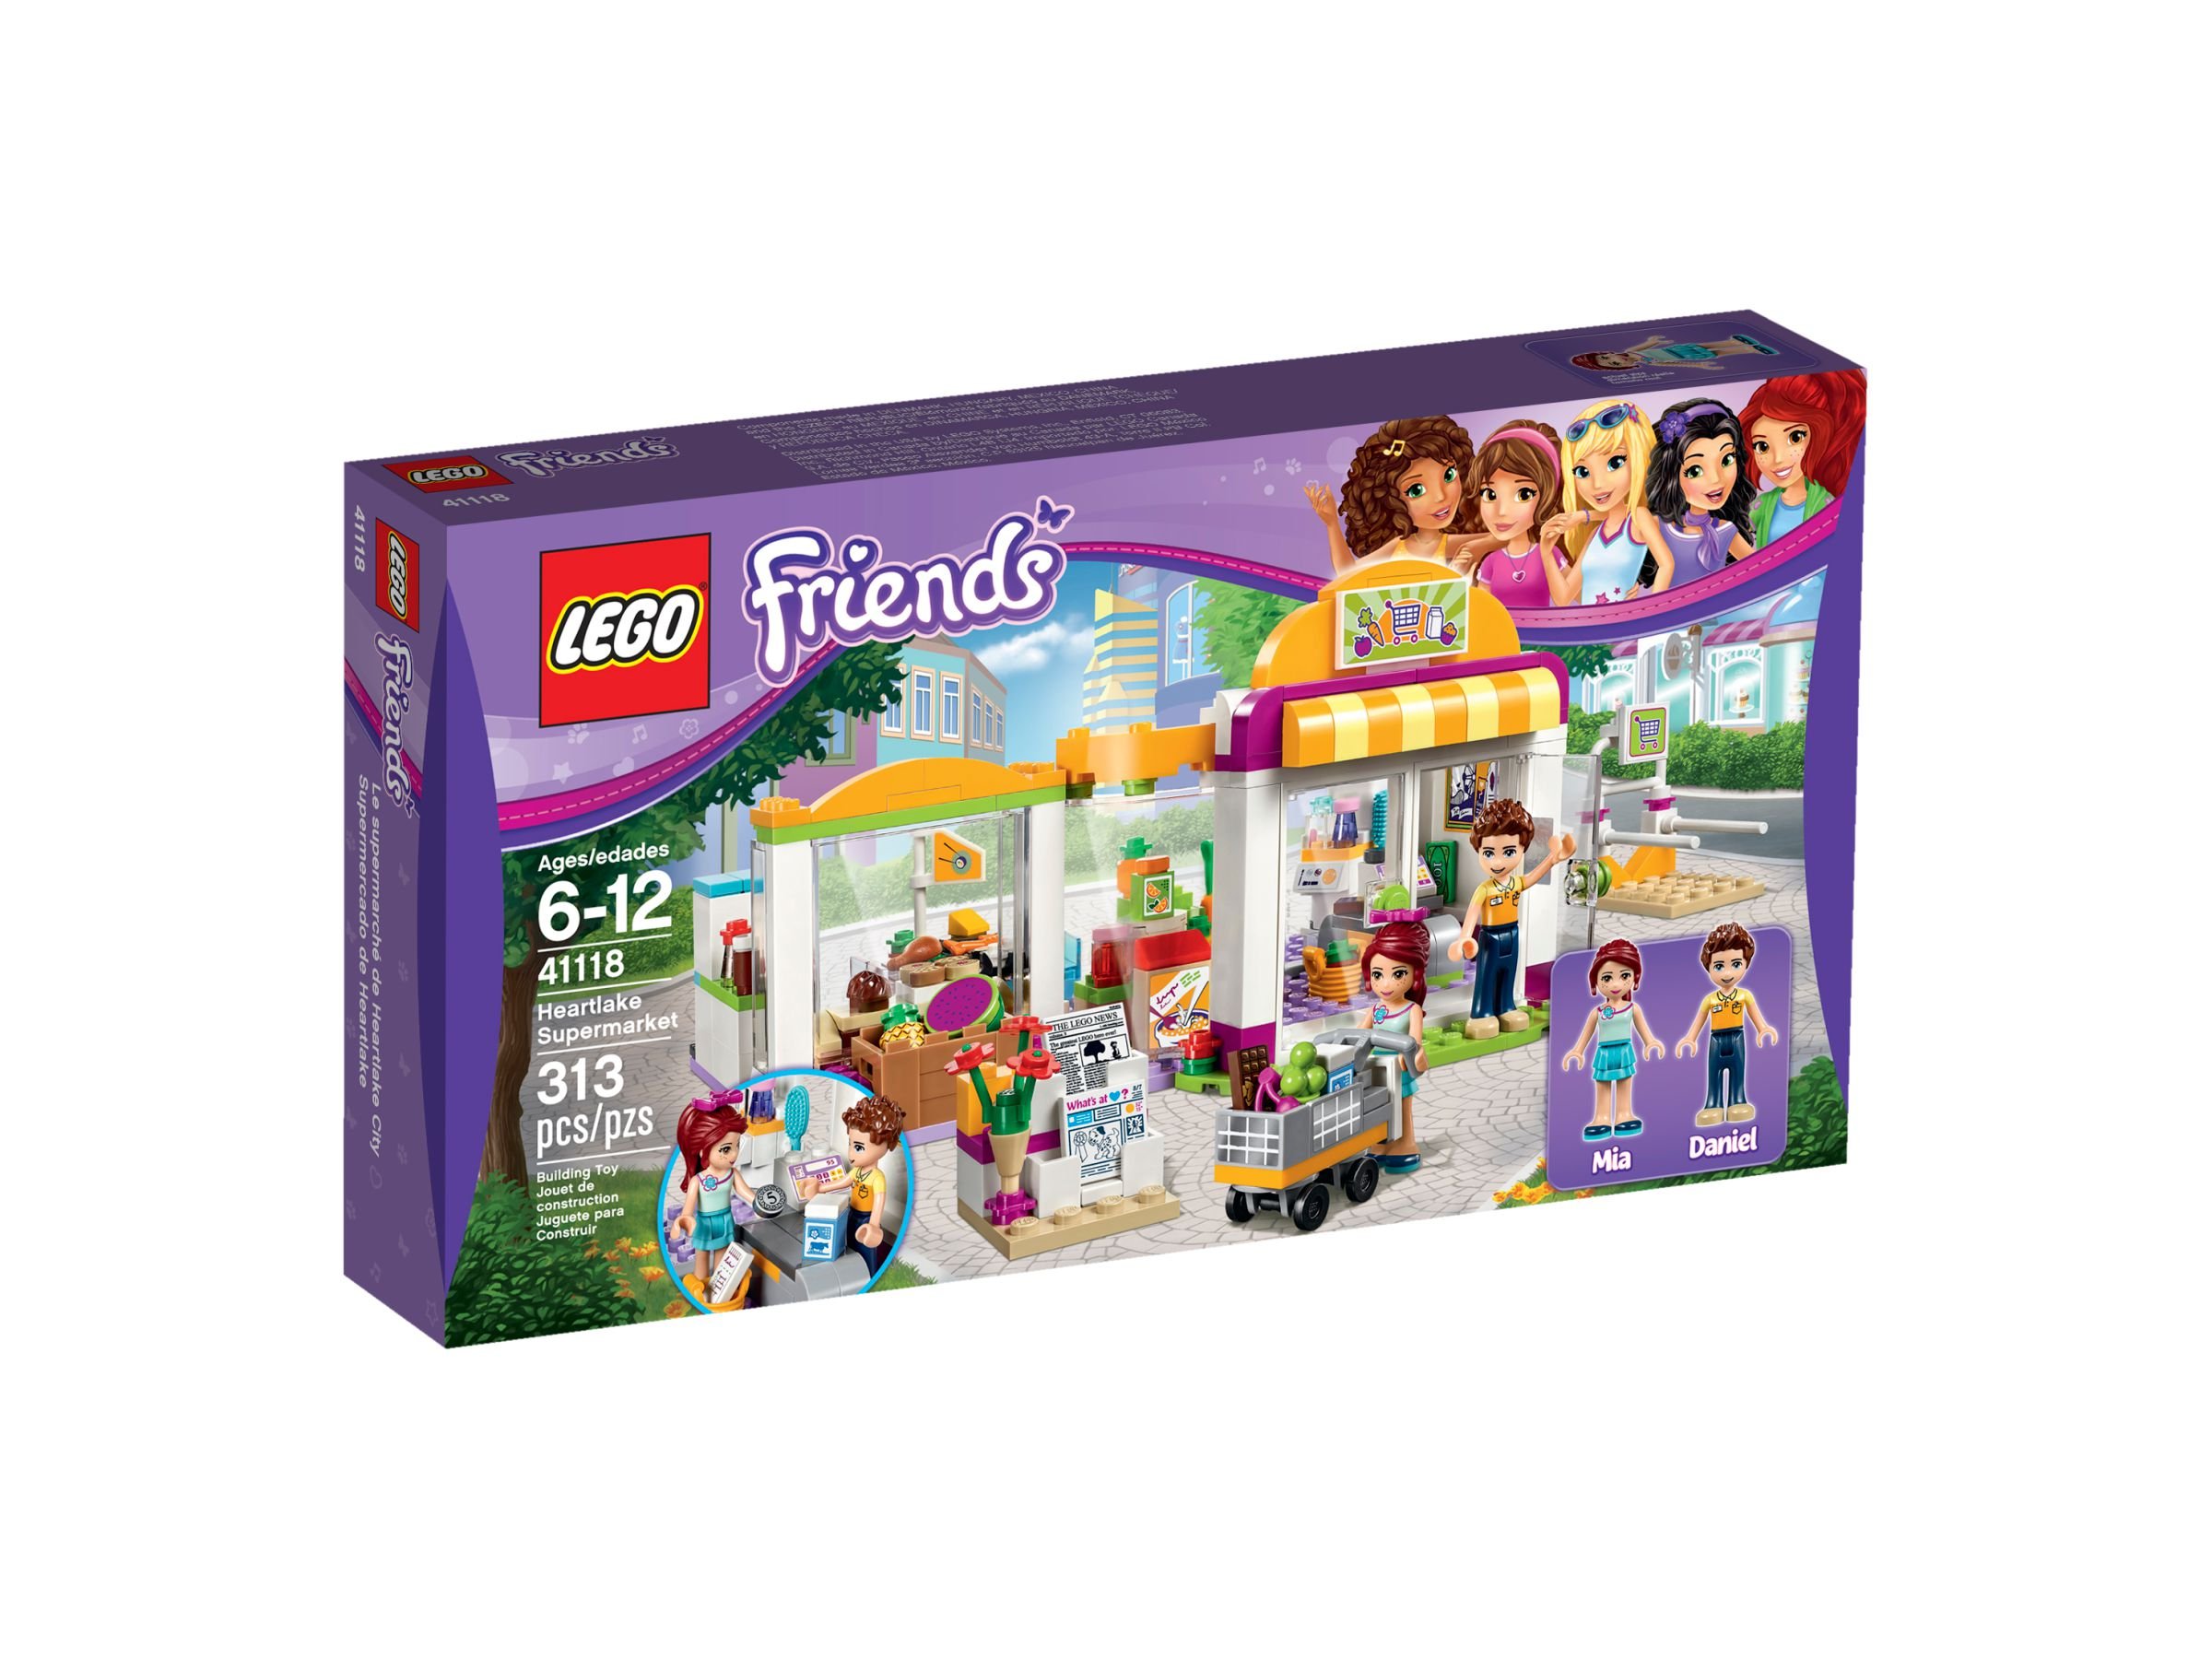 LEGO Friends 41118 Heartlake Supermarkt LEGO_41118_alt1.jpg